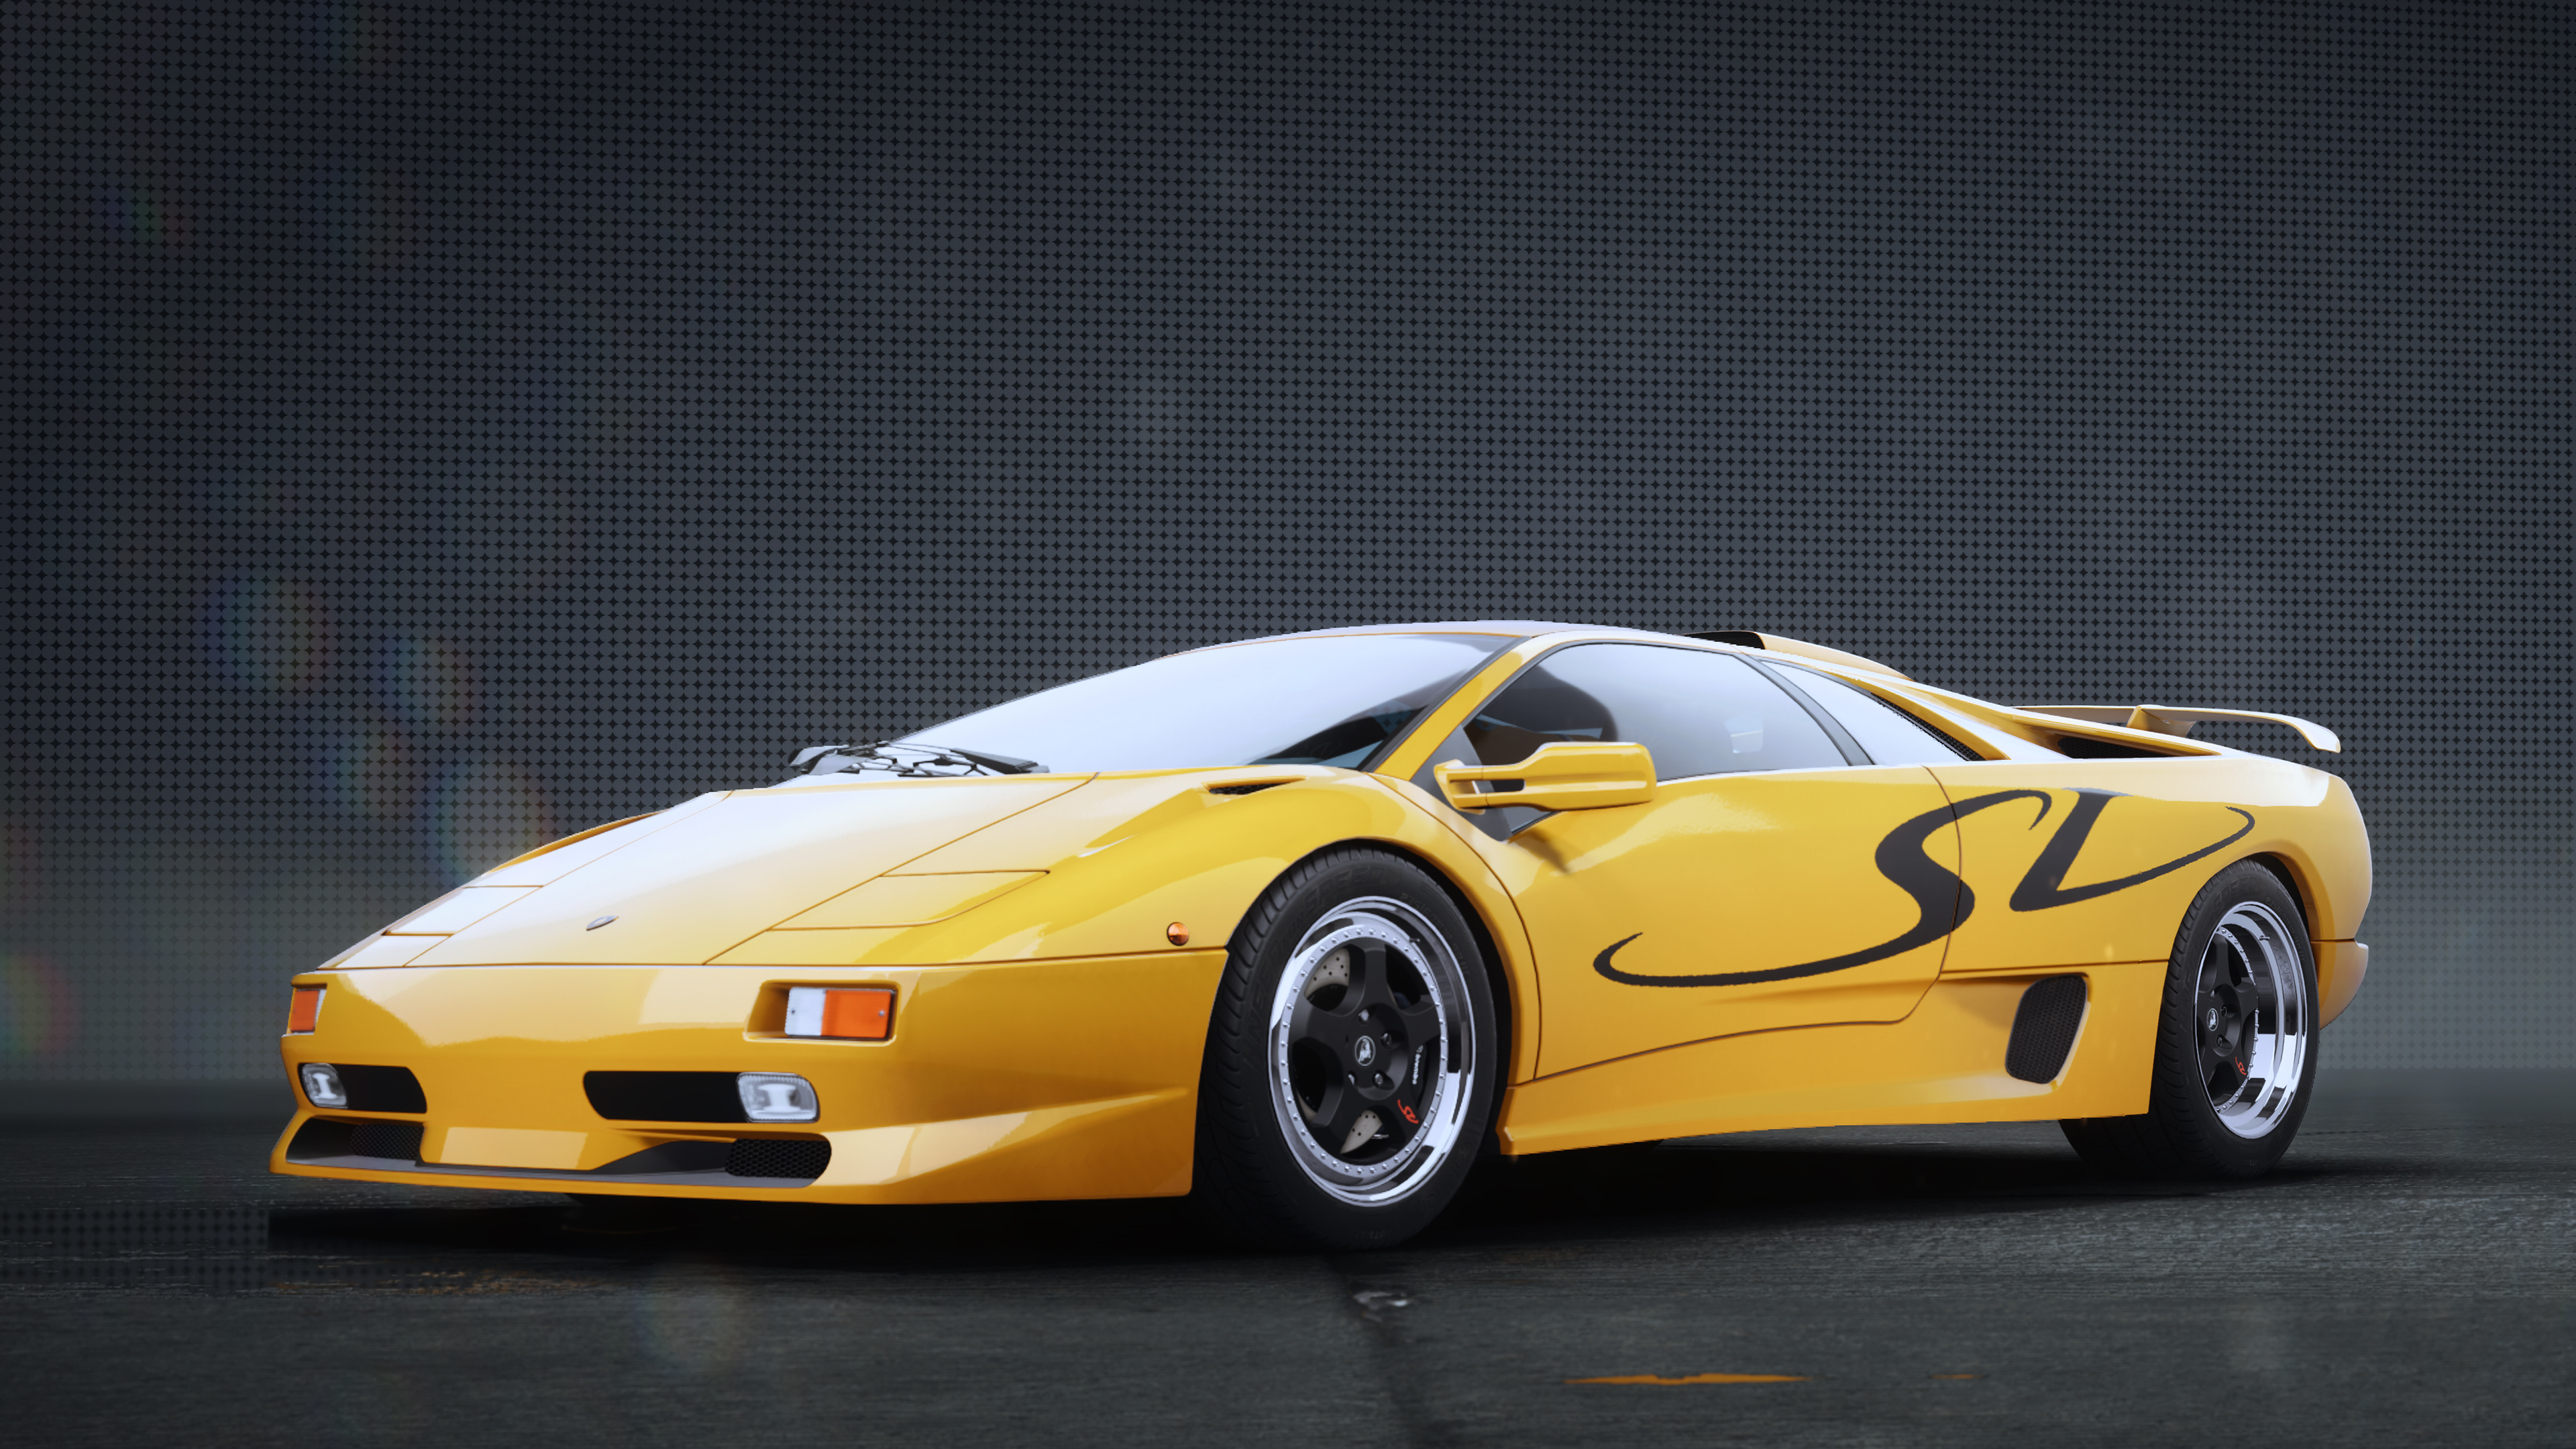 Lamborghini Diablo SV, Need for Speed Wiki